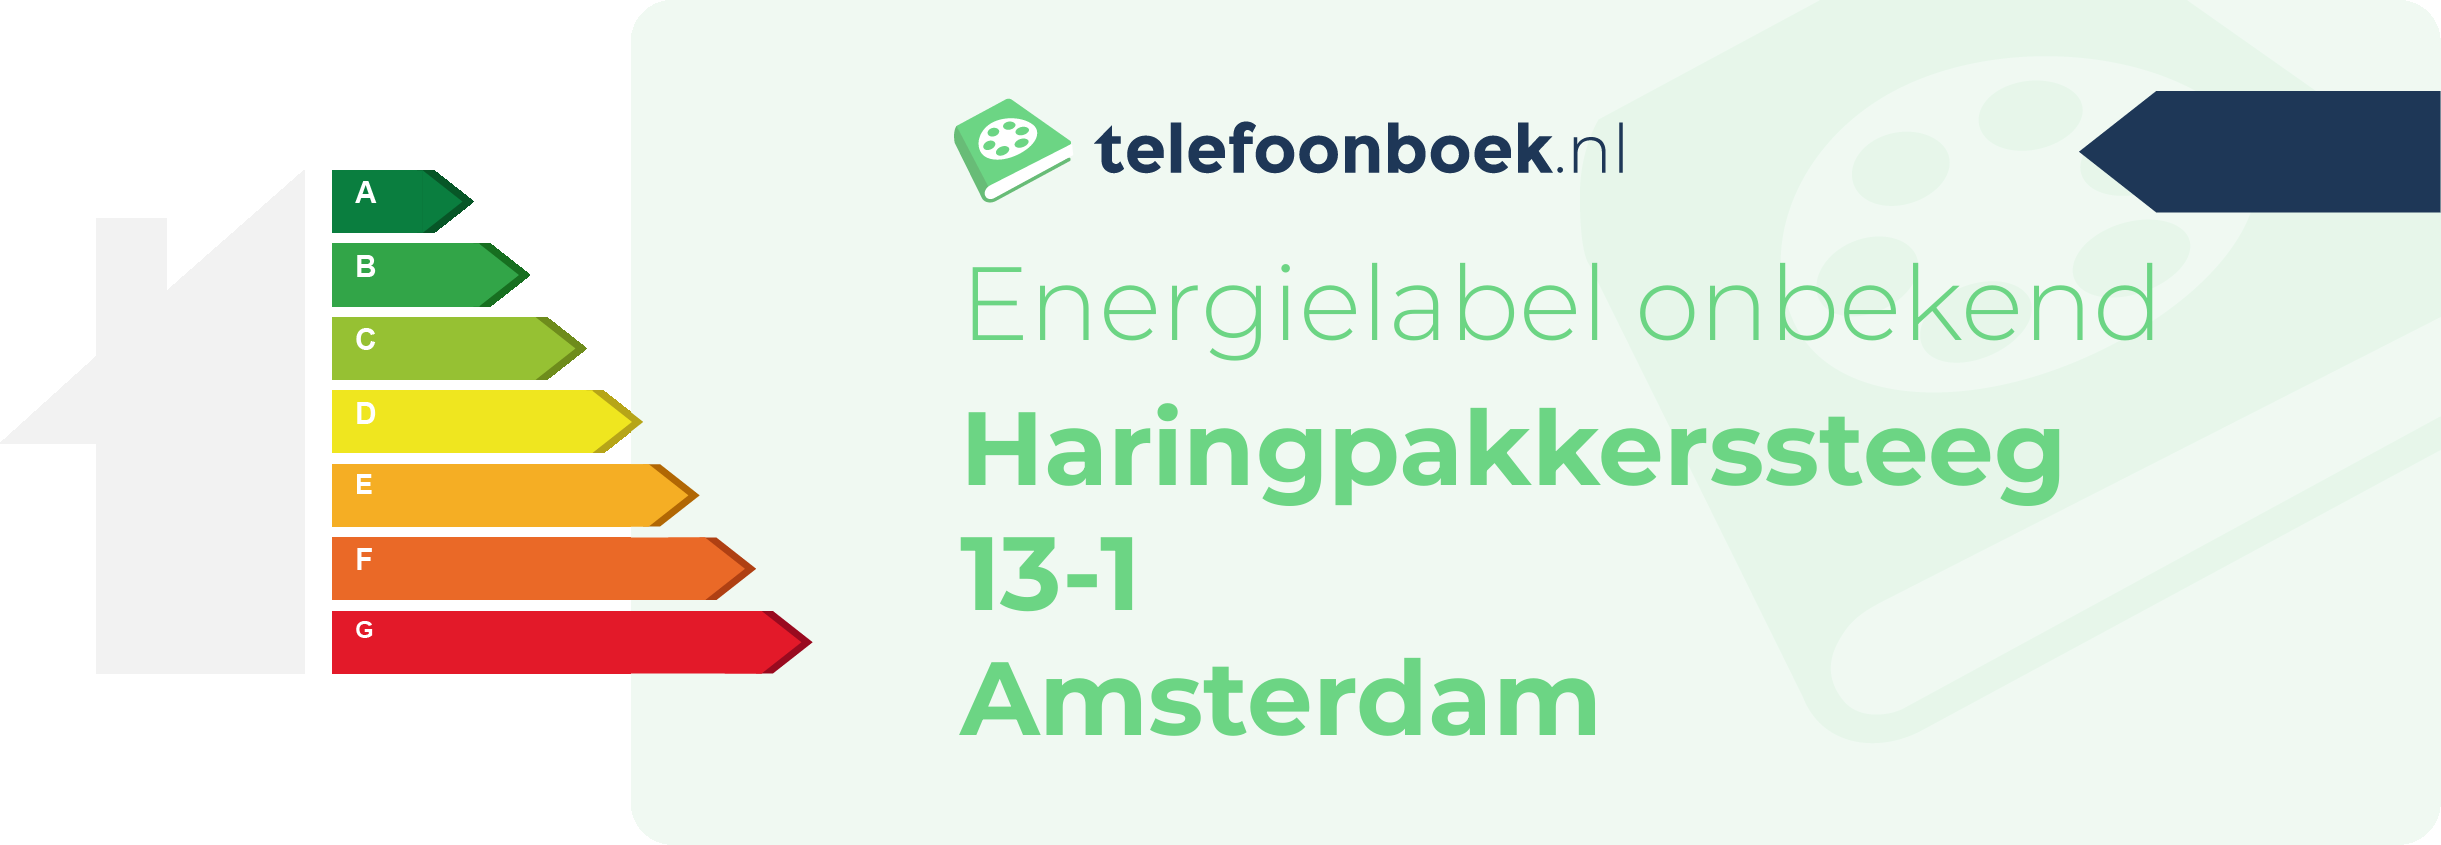 Energielabel Haringpakkerssteeg 13-1 Amsterdam